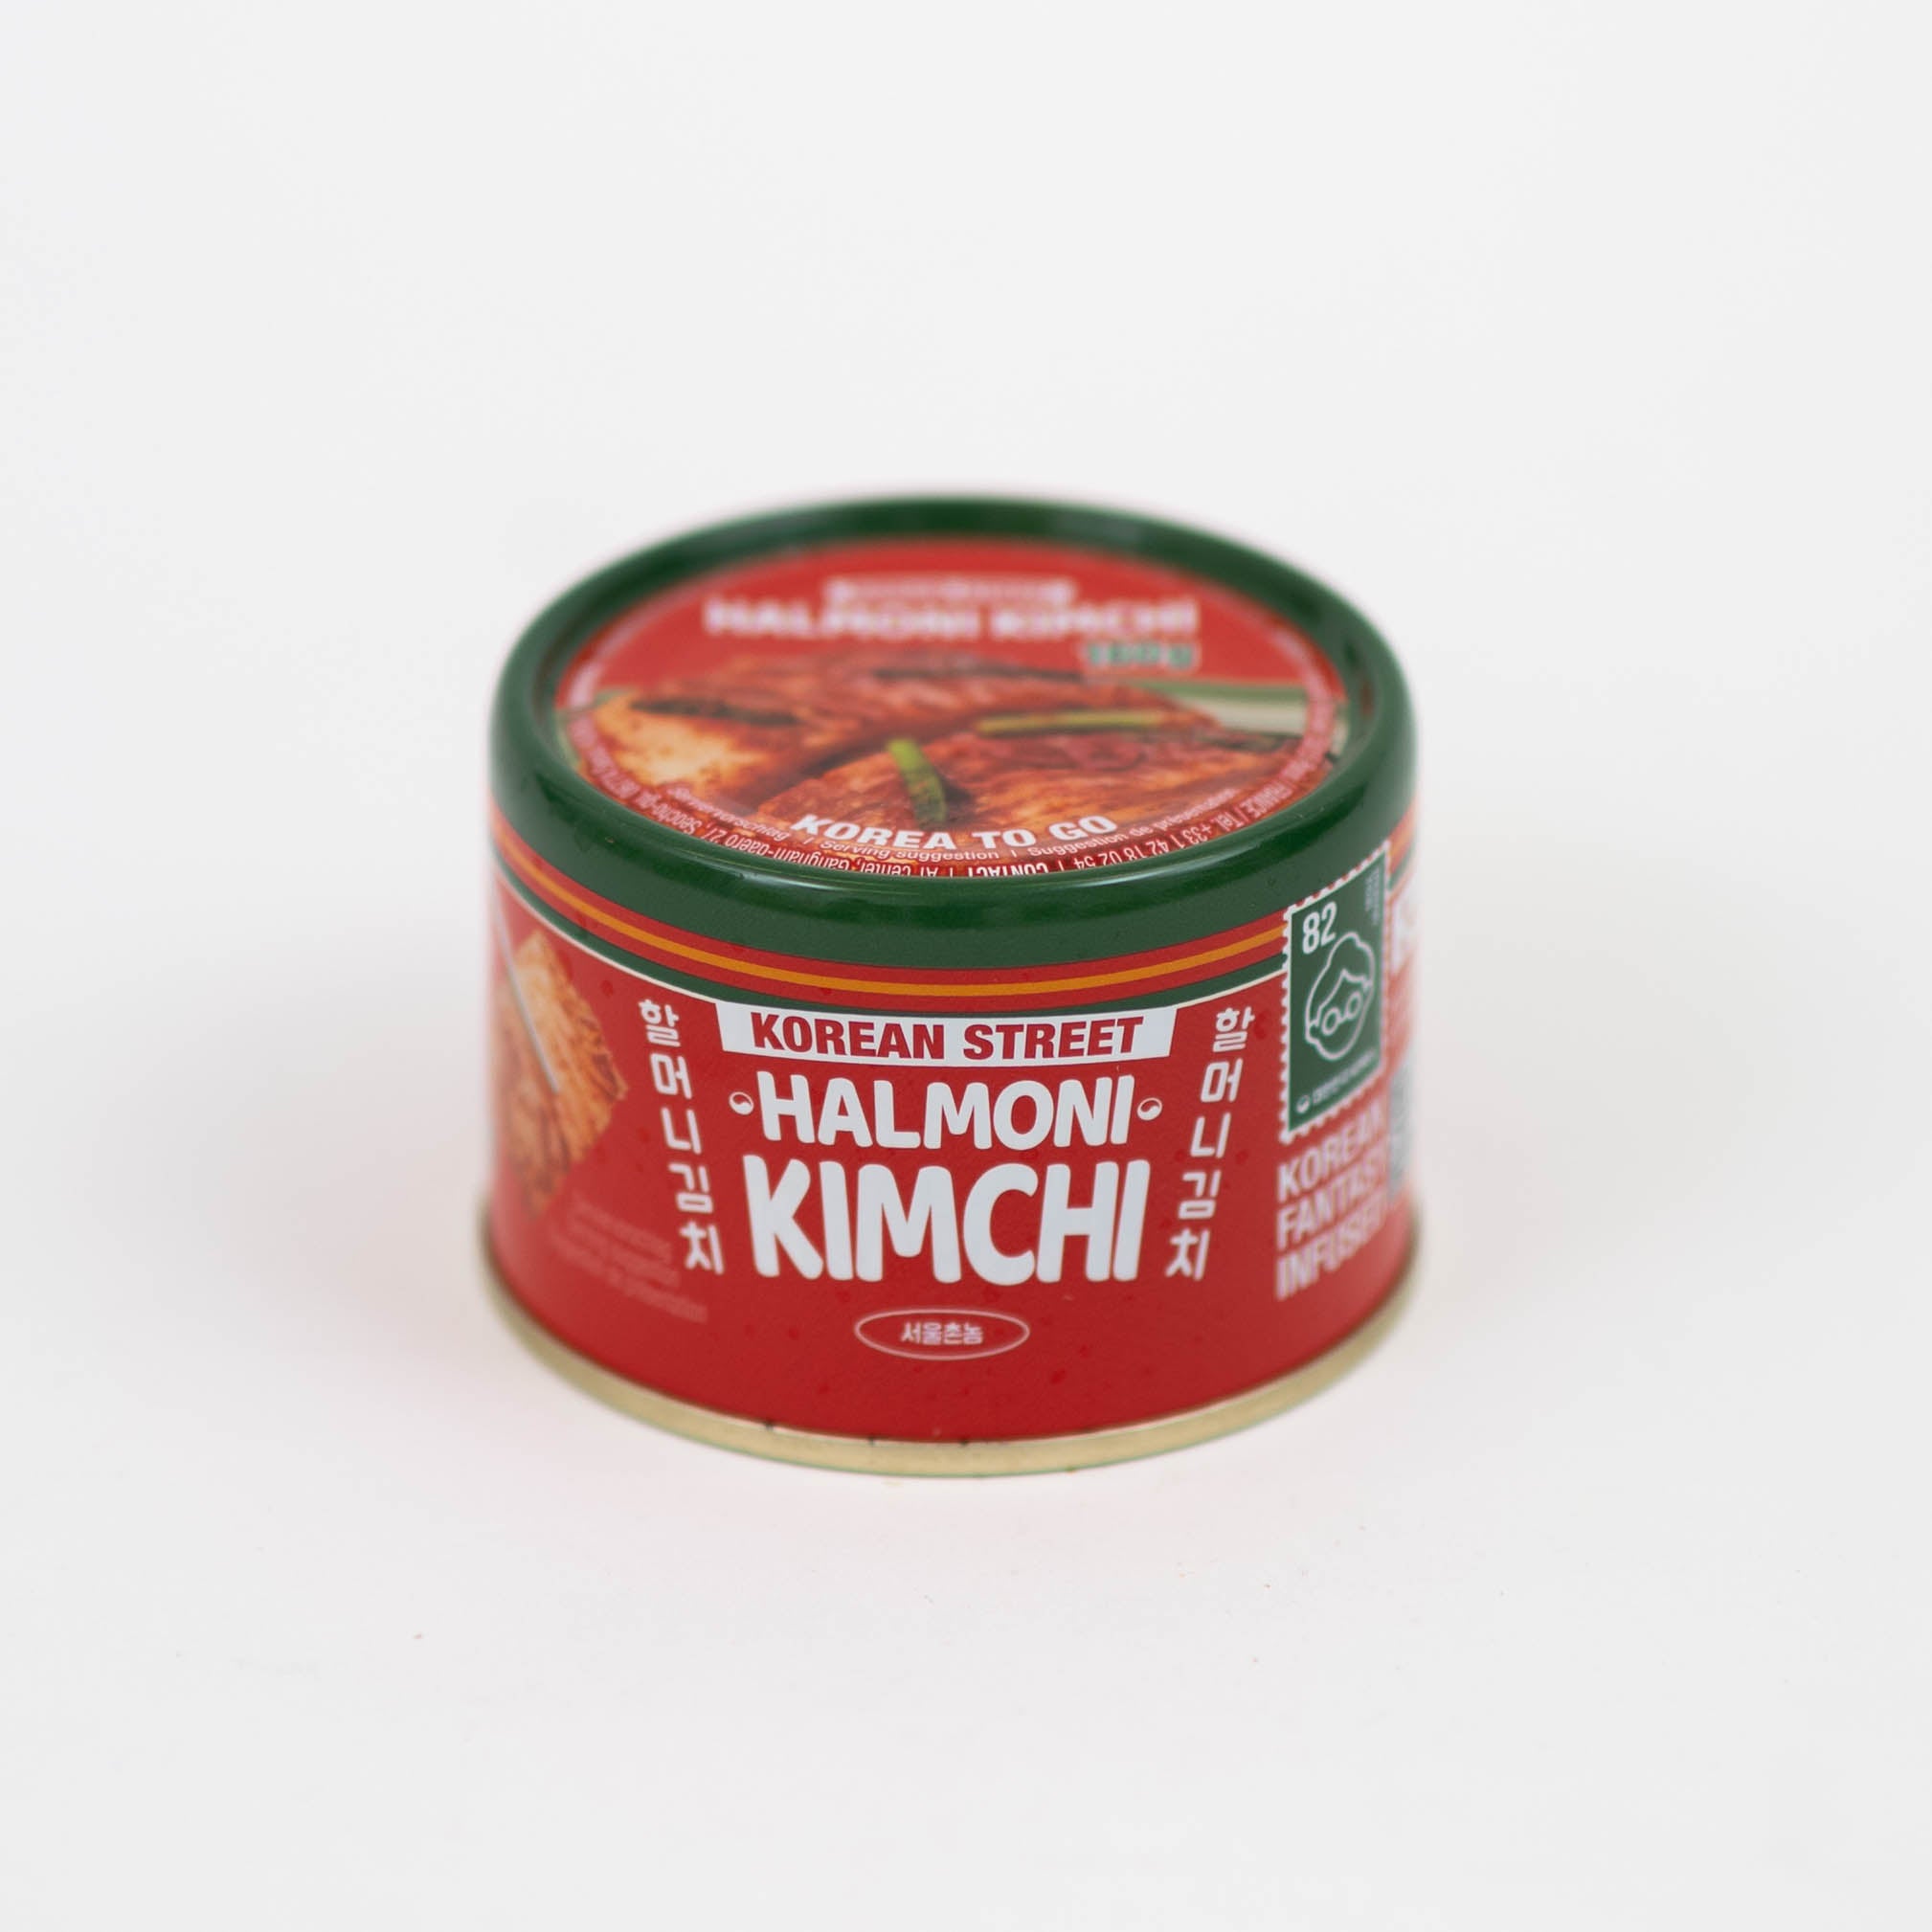 onlineshop dinese.de asia shop asiashop korean street halmoni kimchi asiatische lebensmittel snacks eingelegter salat